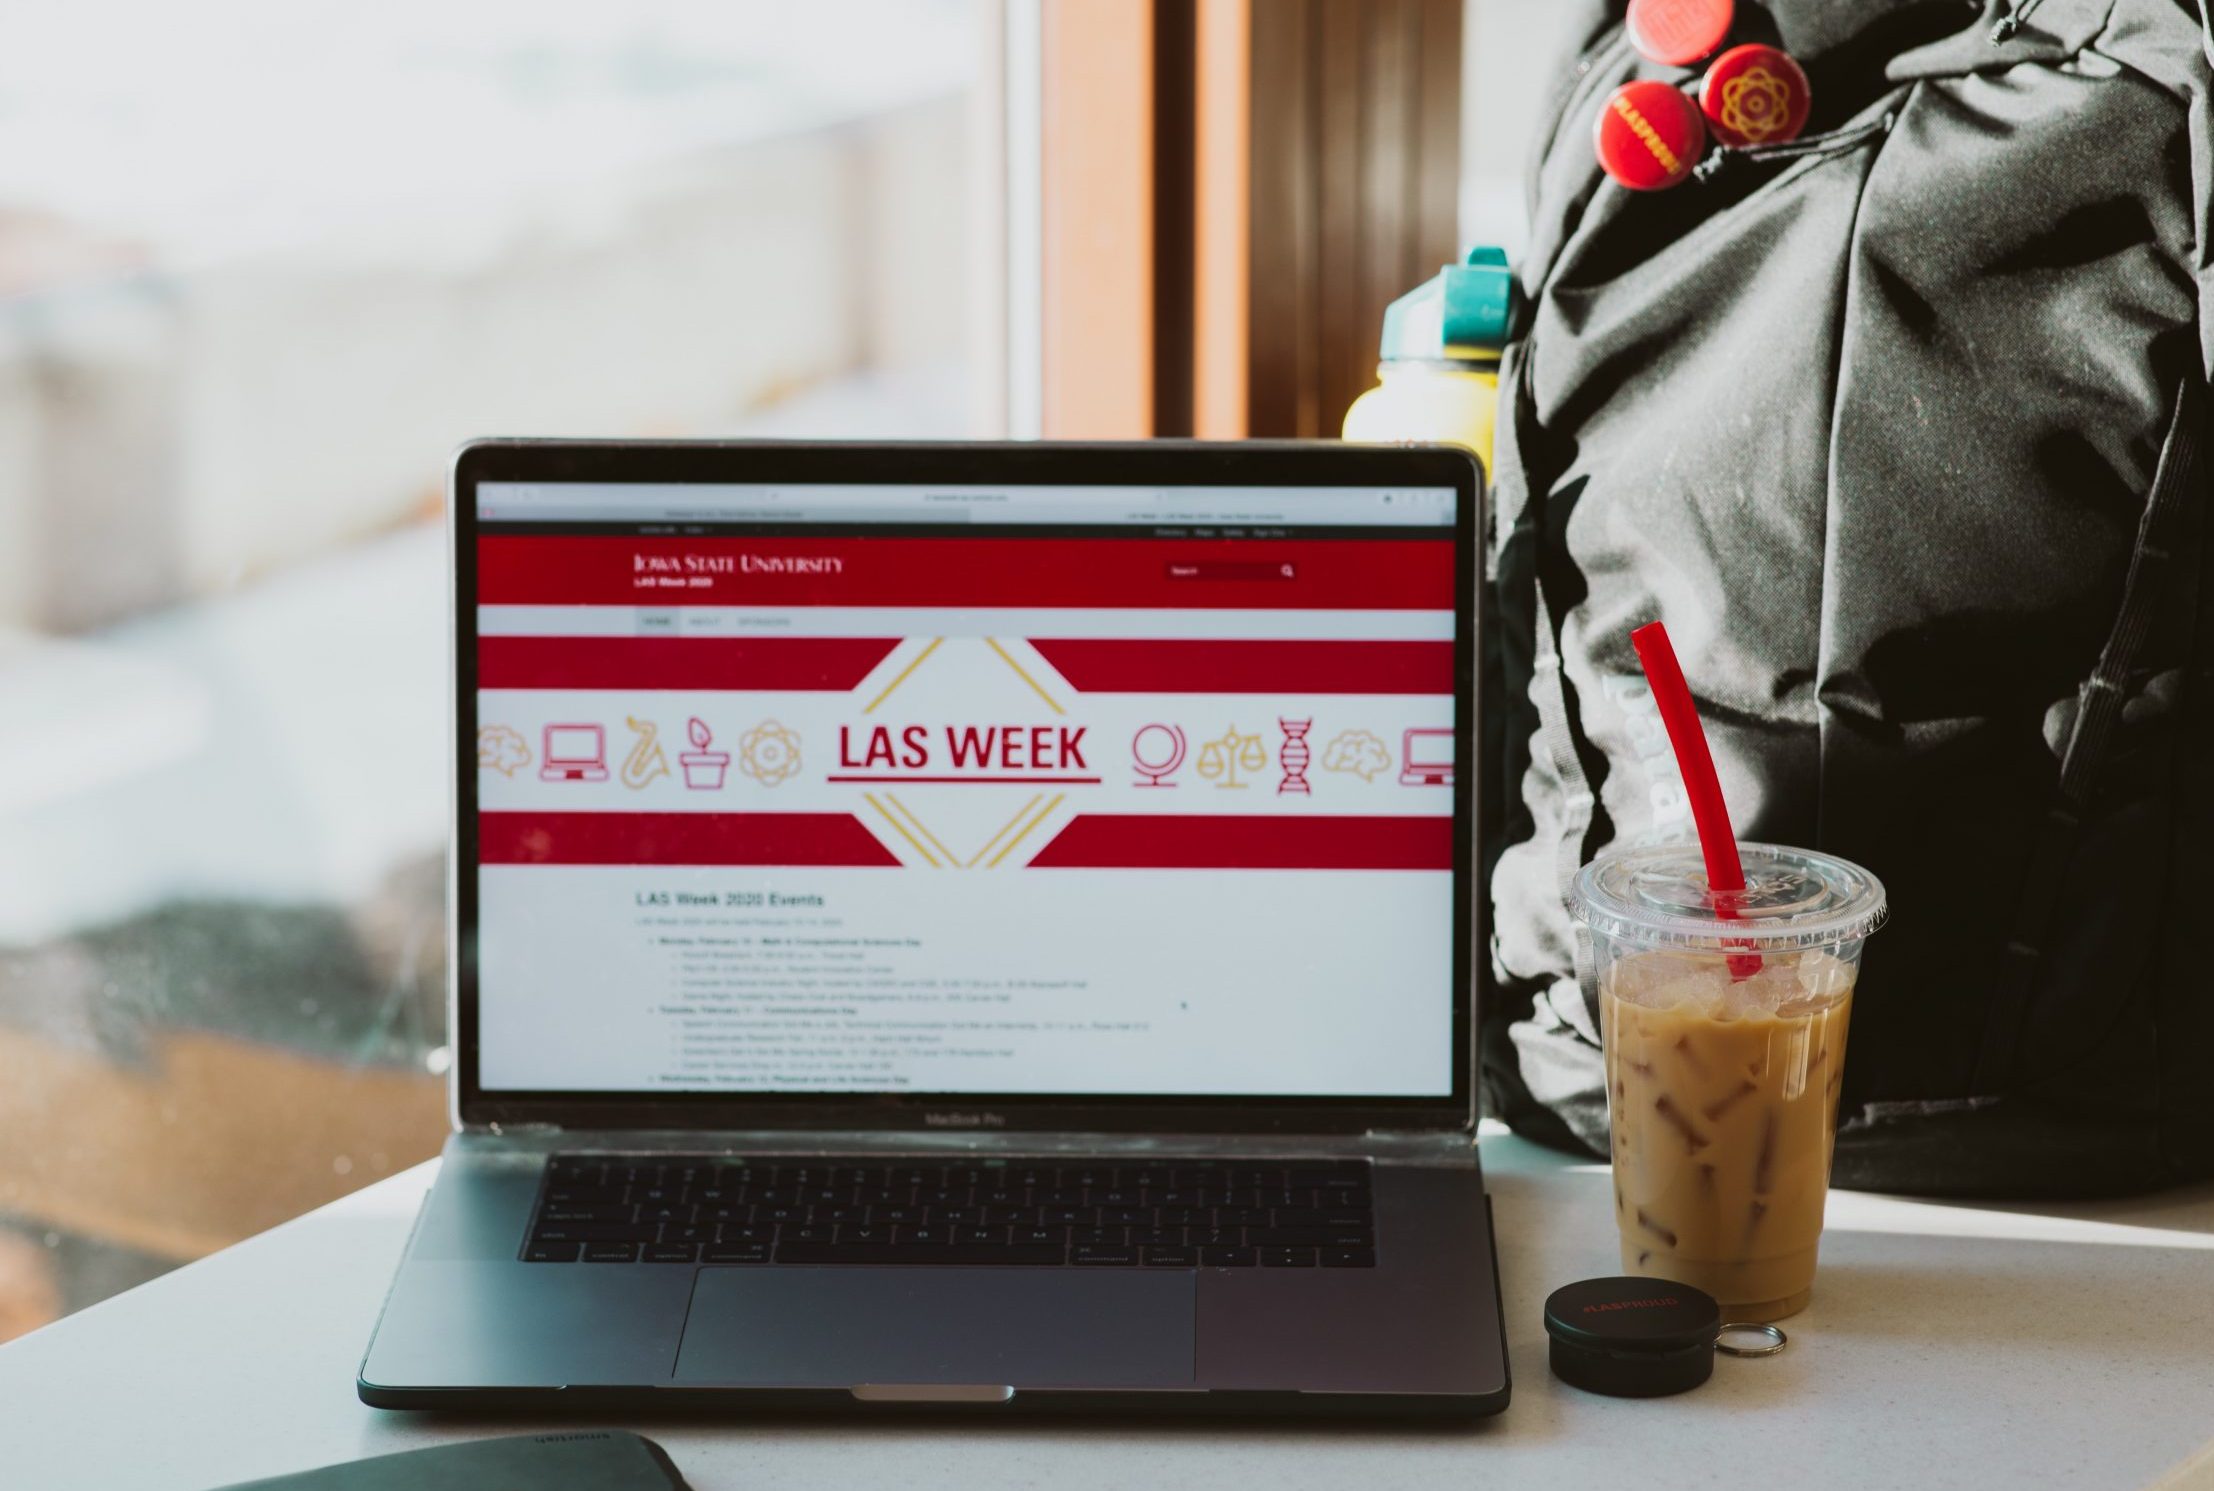 laptop with LAS week image displayed